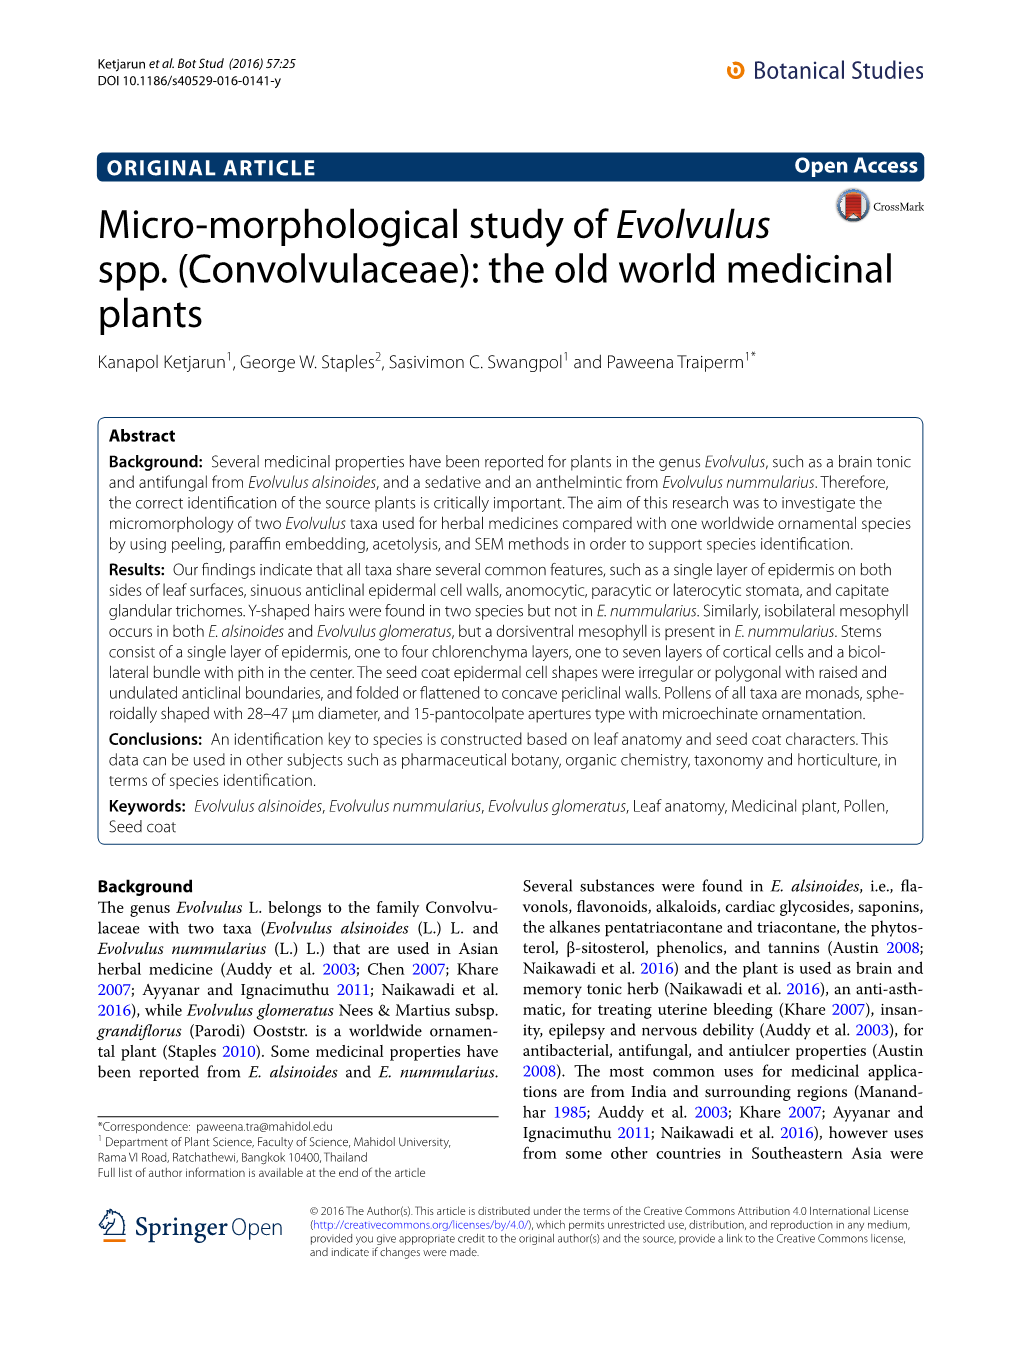 Micro-Morphological Study of Evolvulus Spp. (Convolvulaceae